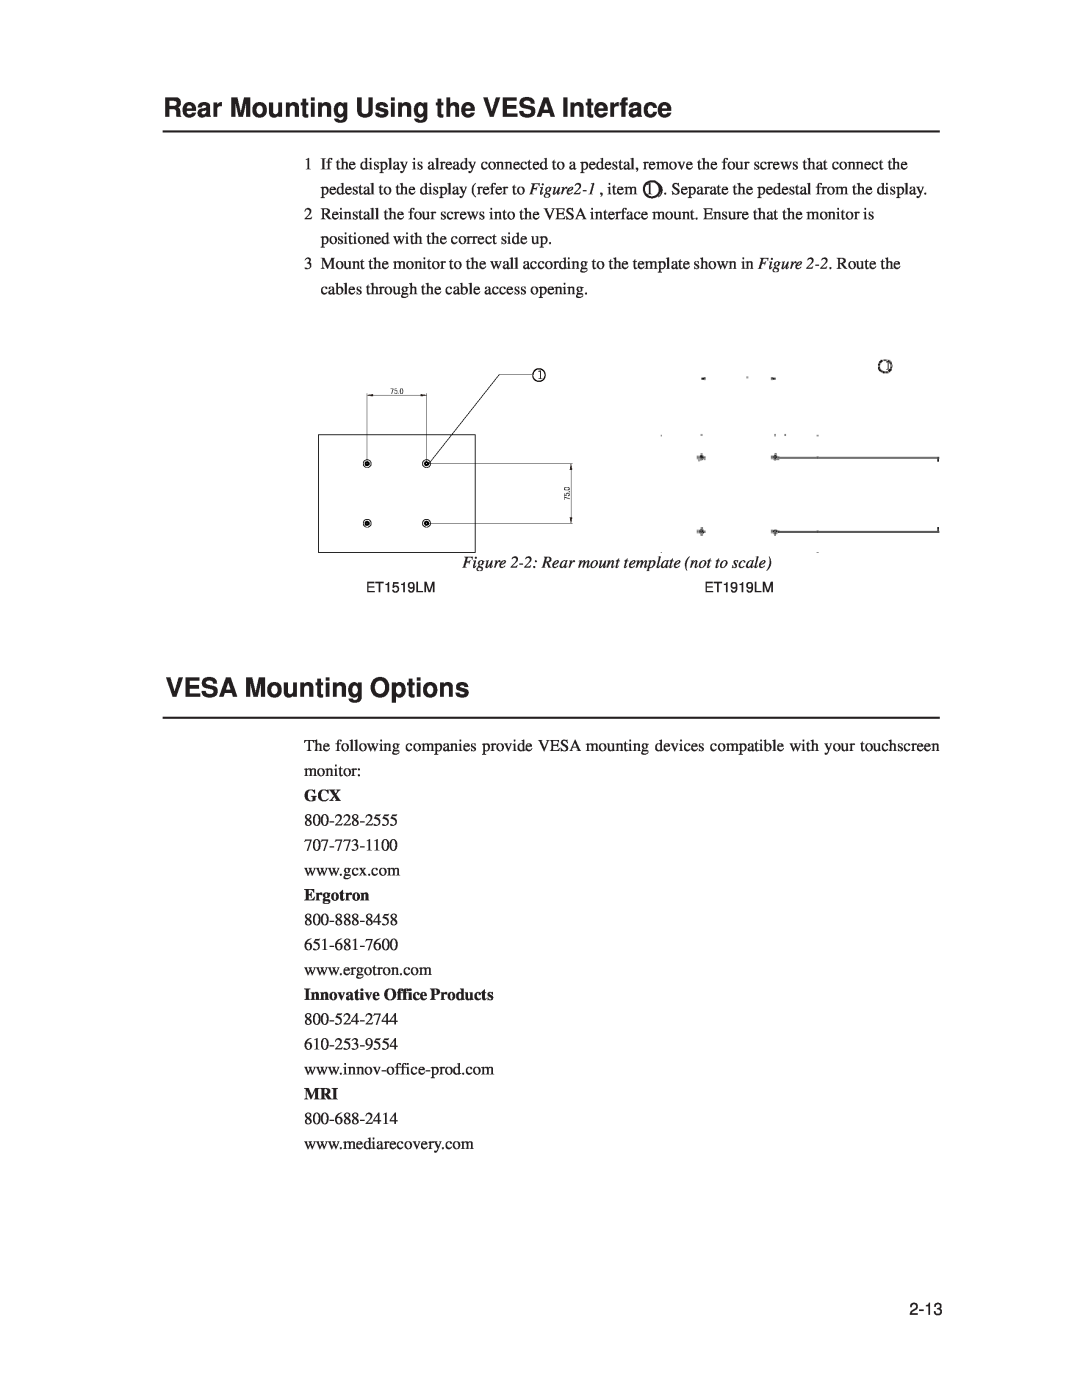 Elo TouchSystems 1519L, 1919L manual Rear Mounting Using the VESA Interface, VESA Mounting Options, 2-13, Ergotron 